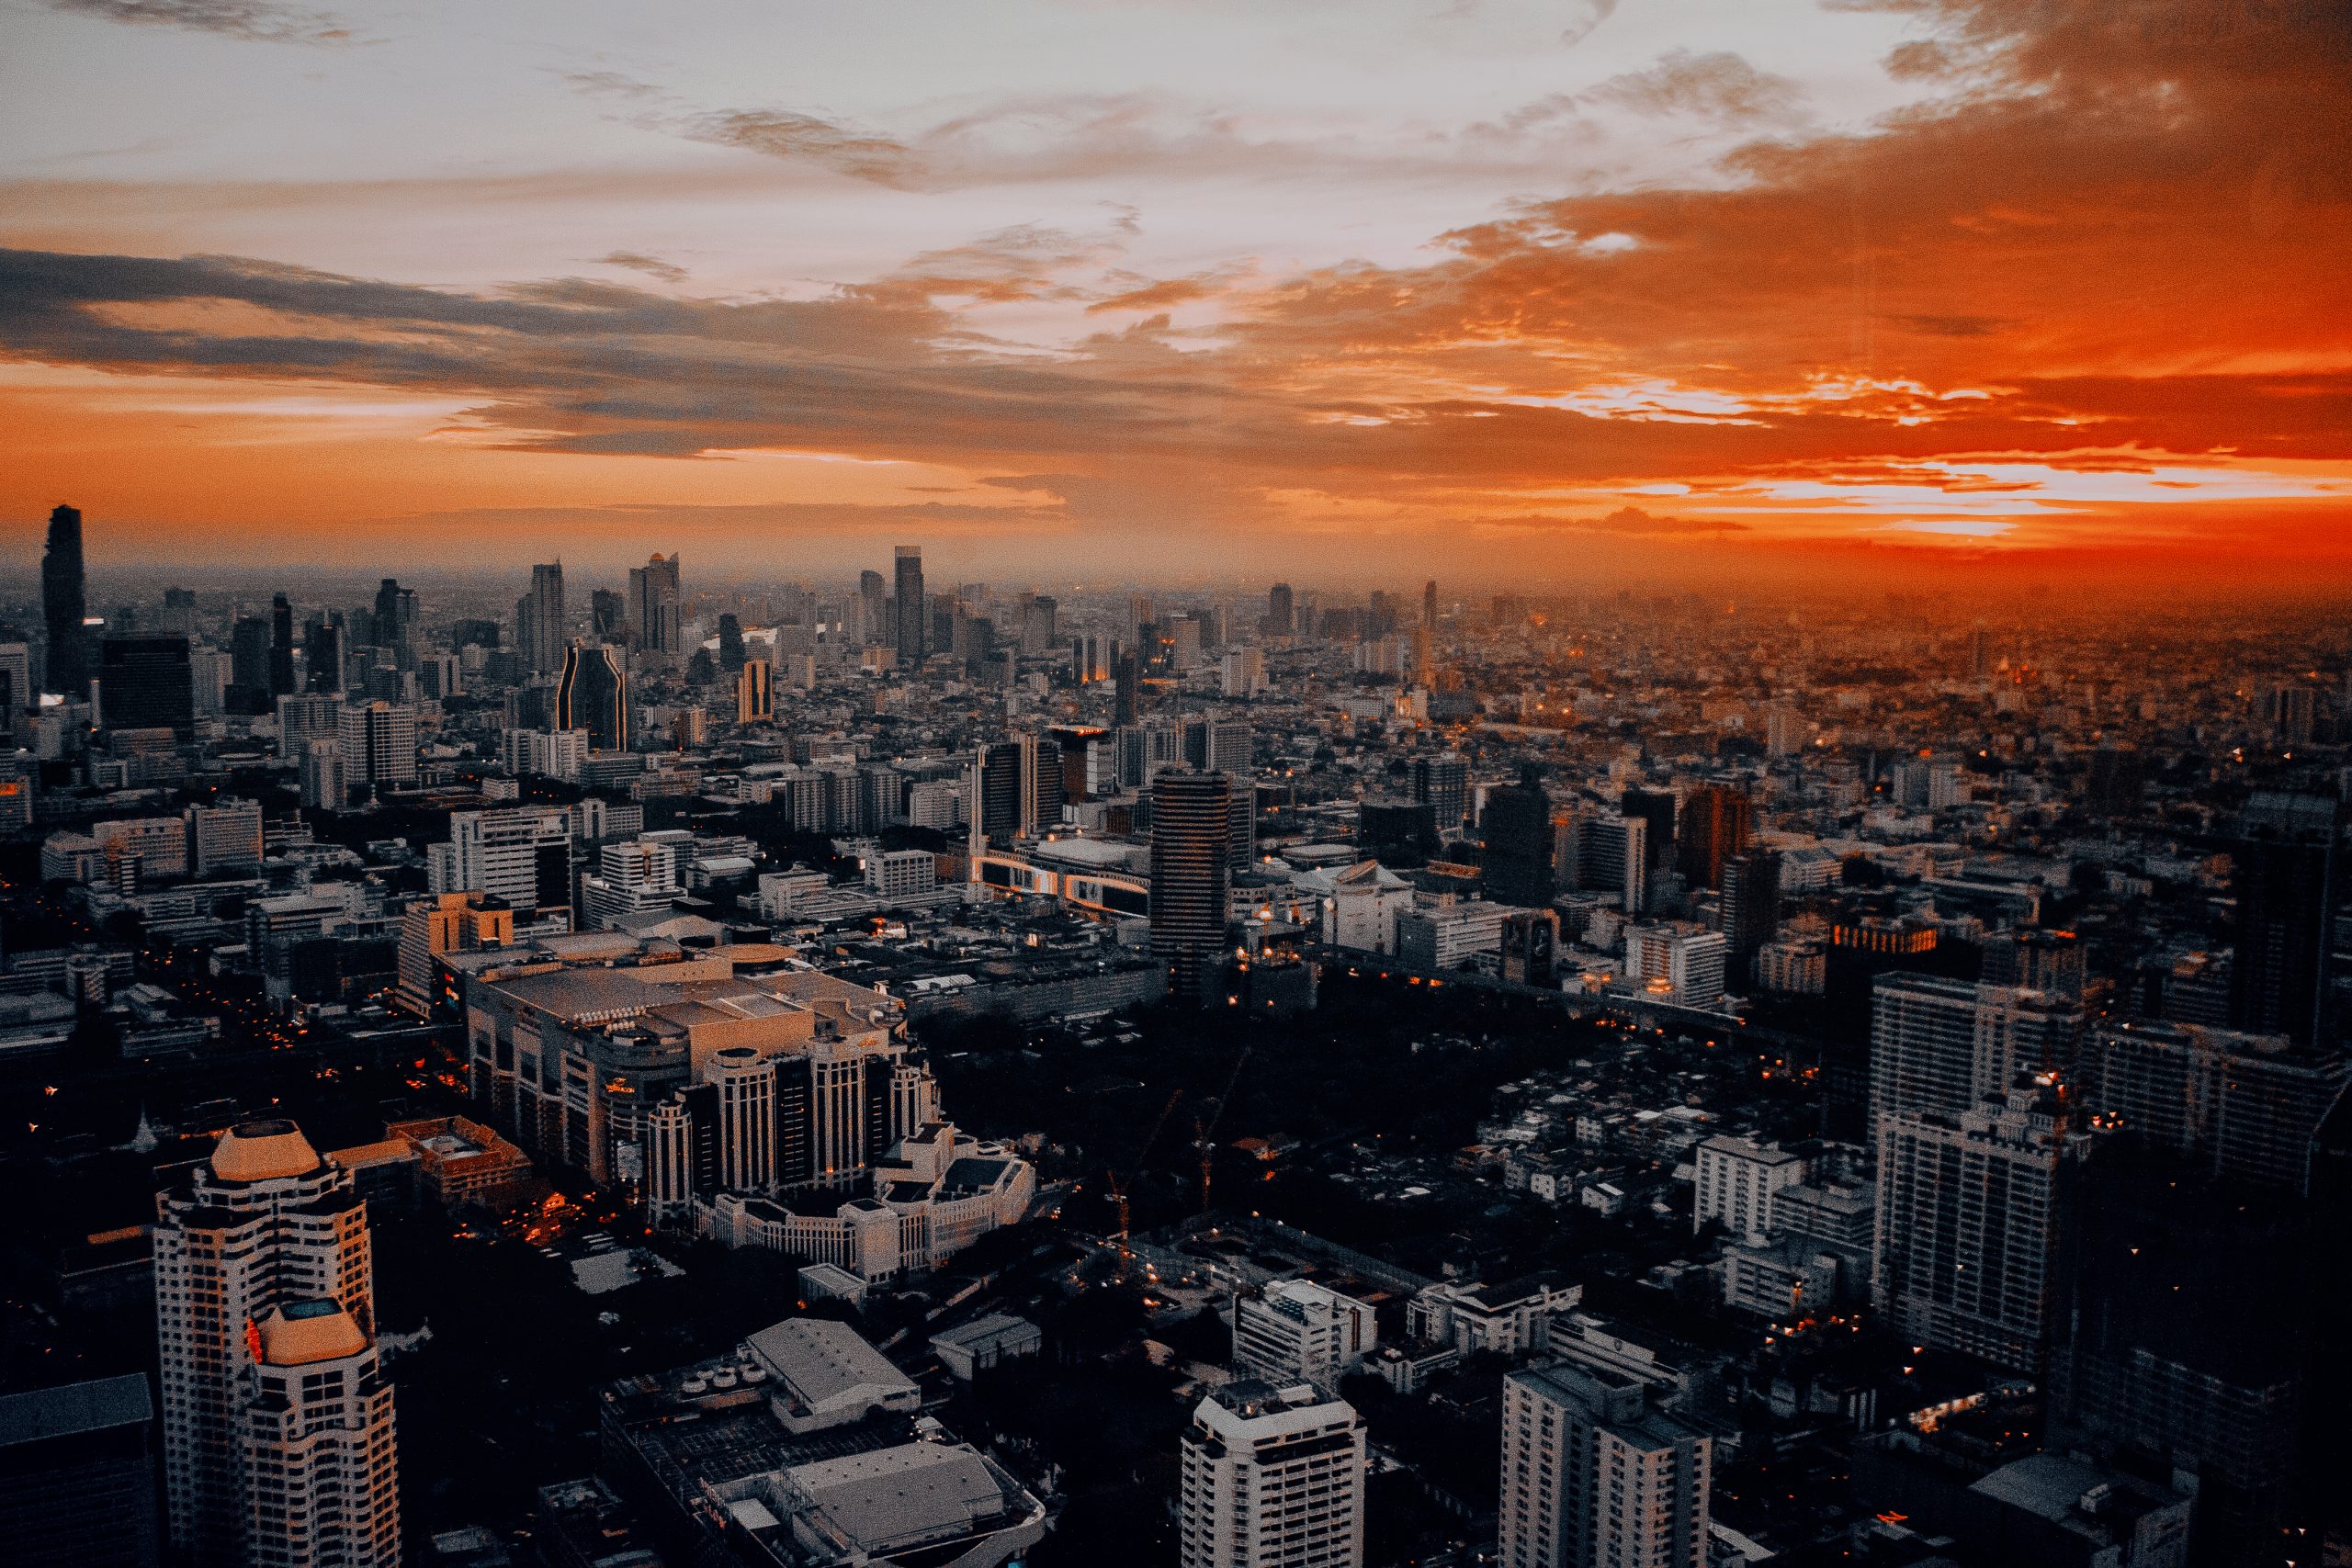 Bangkok City Sunset